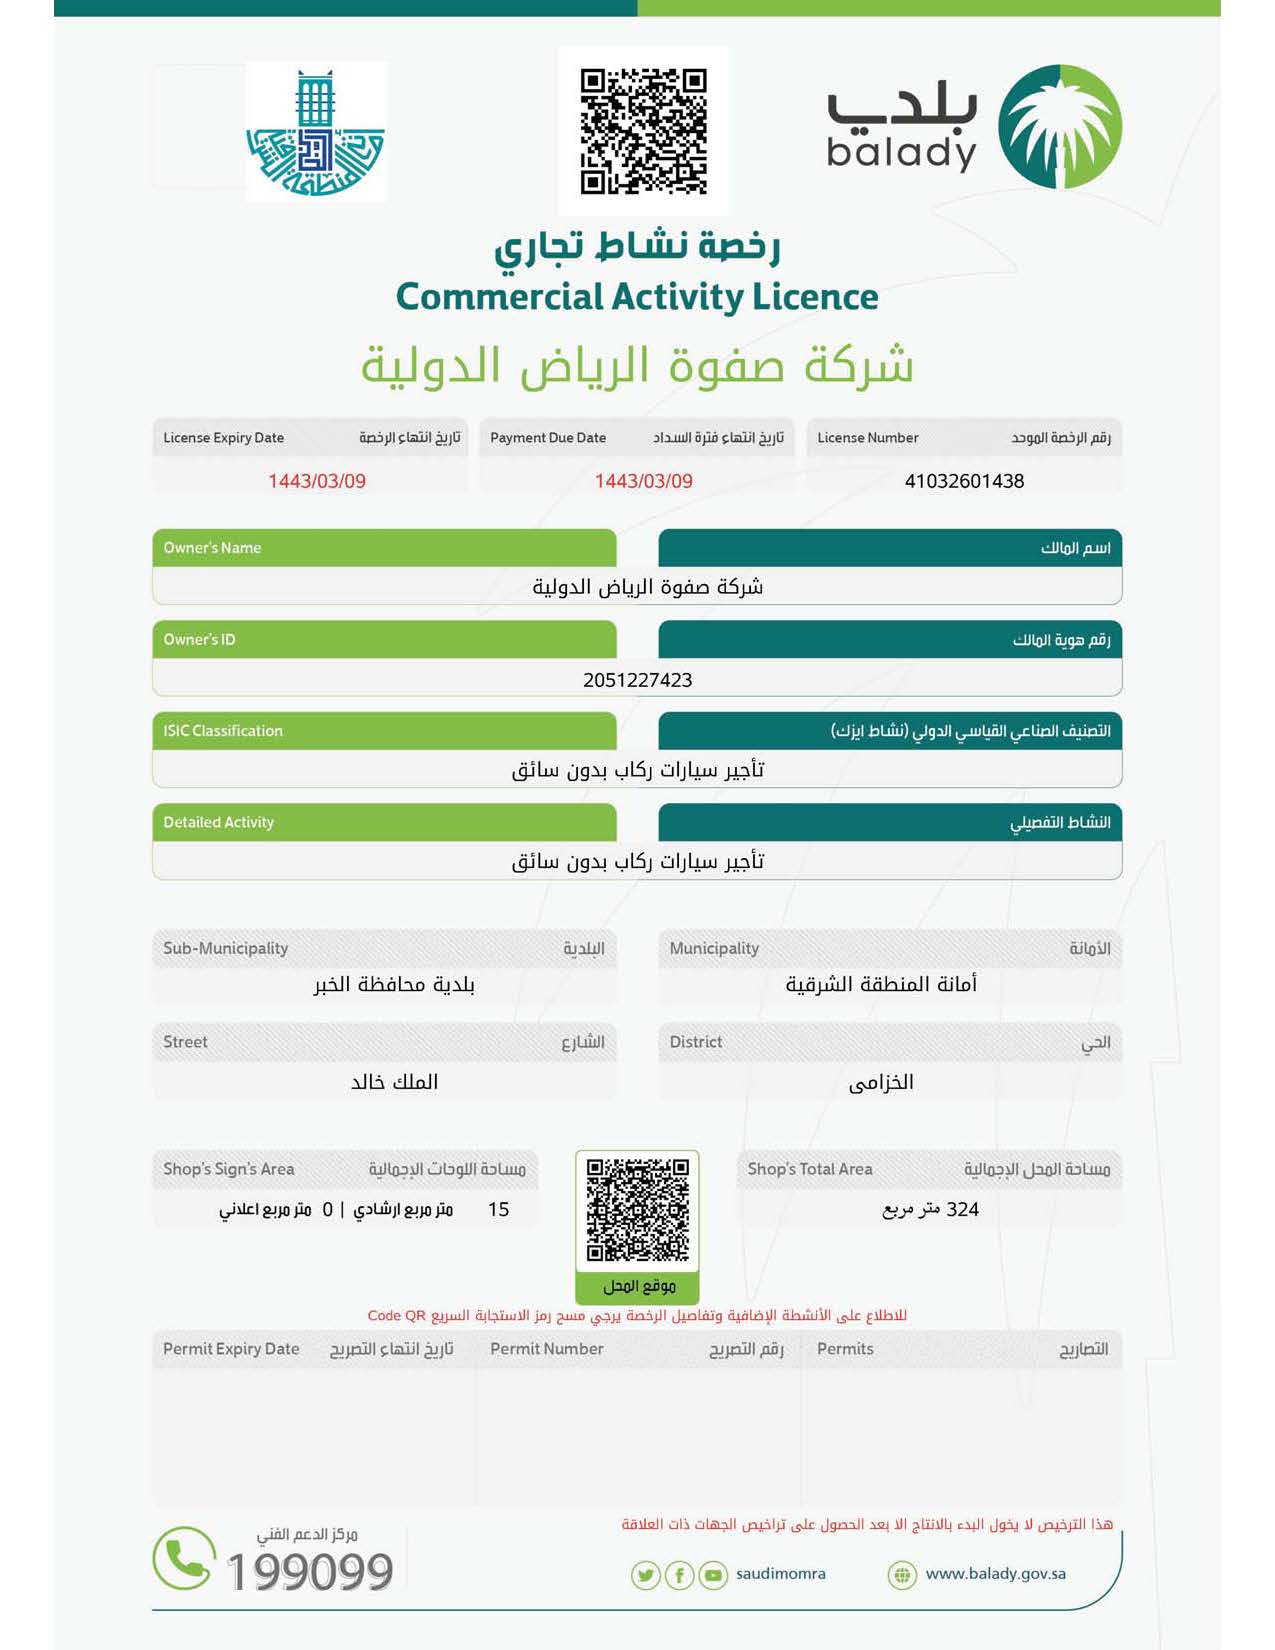 البلديات Page 19 One of the leading companies and a significant number in all its fields